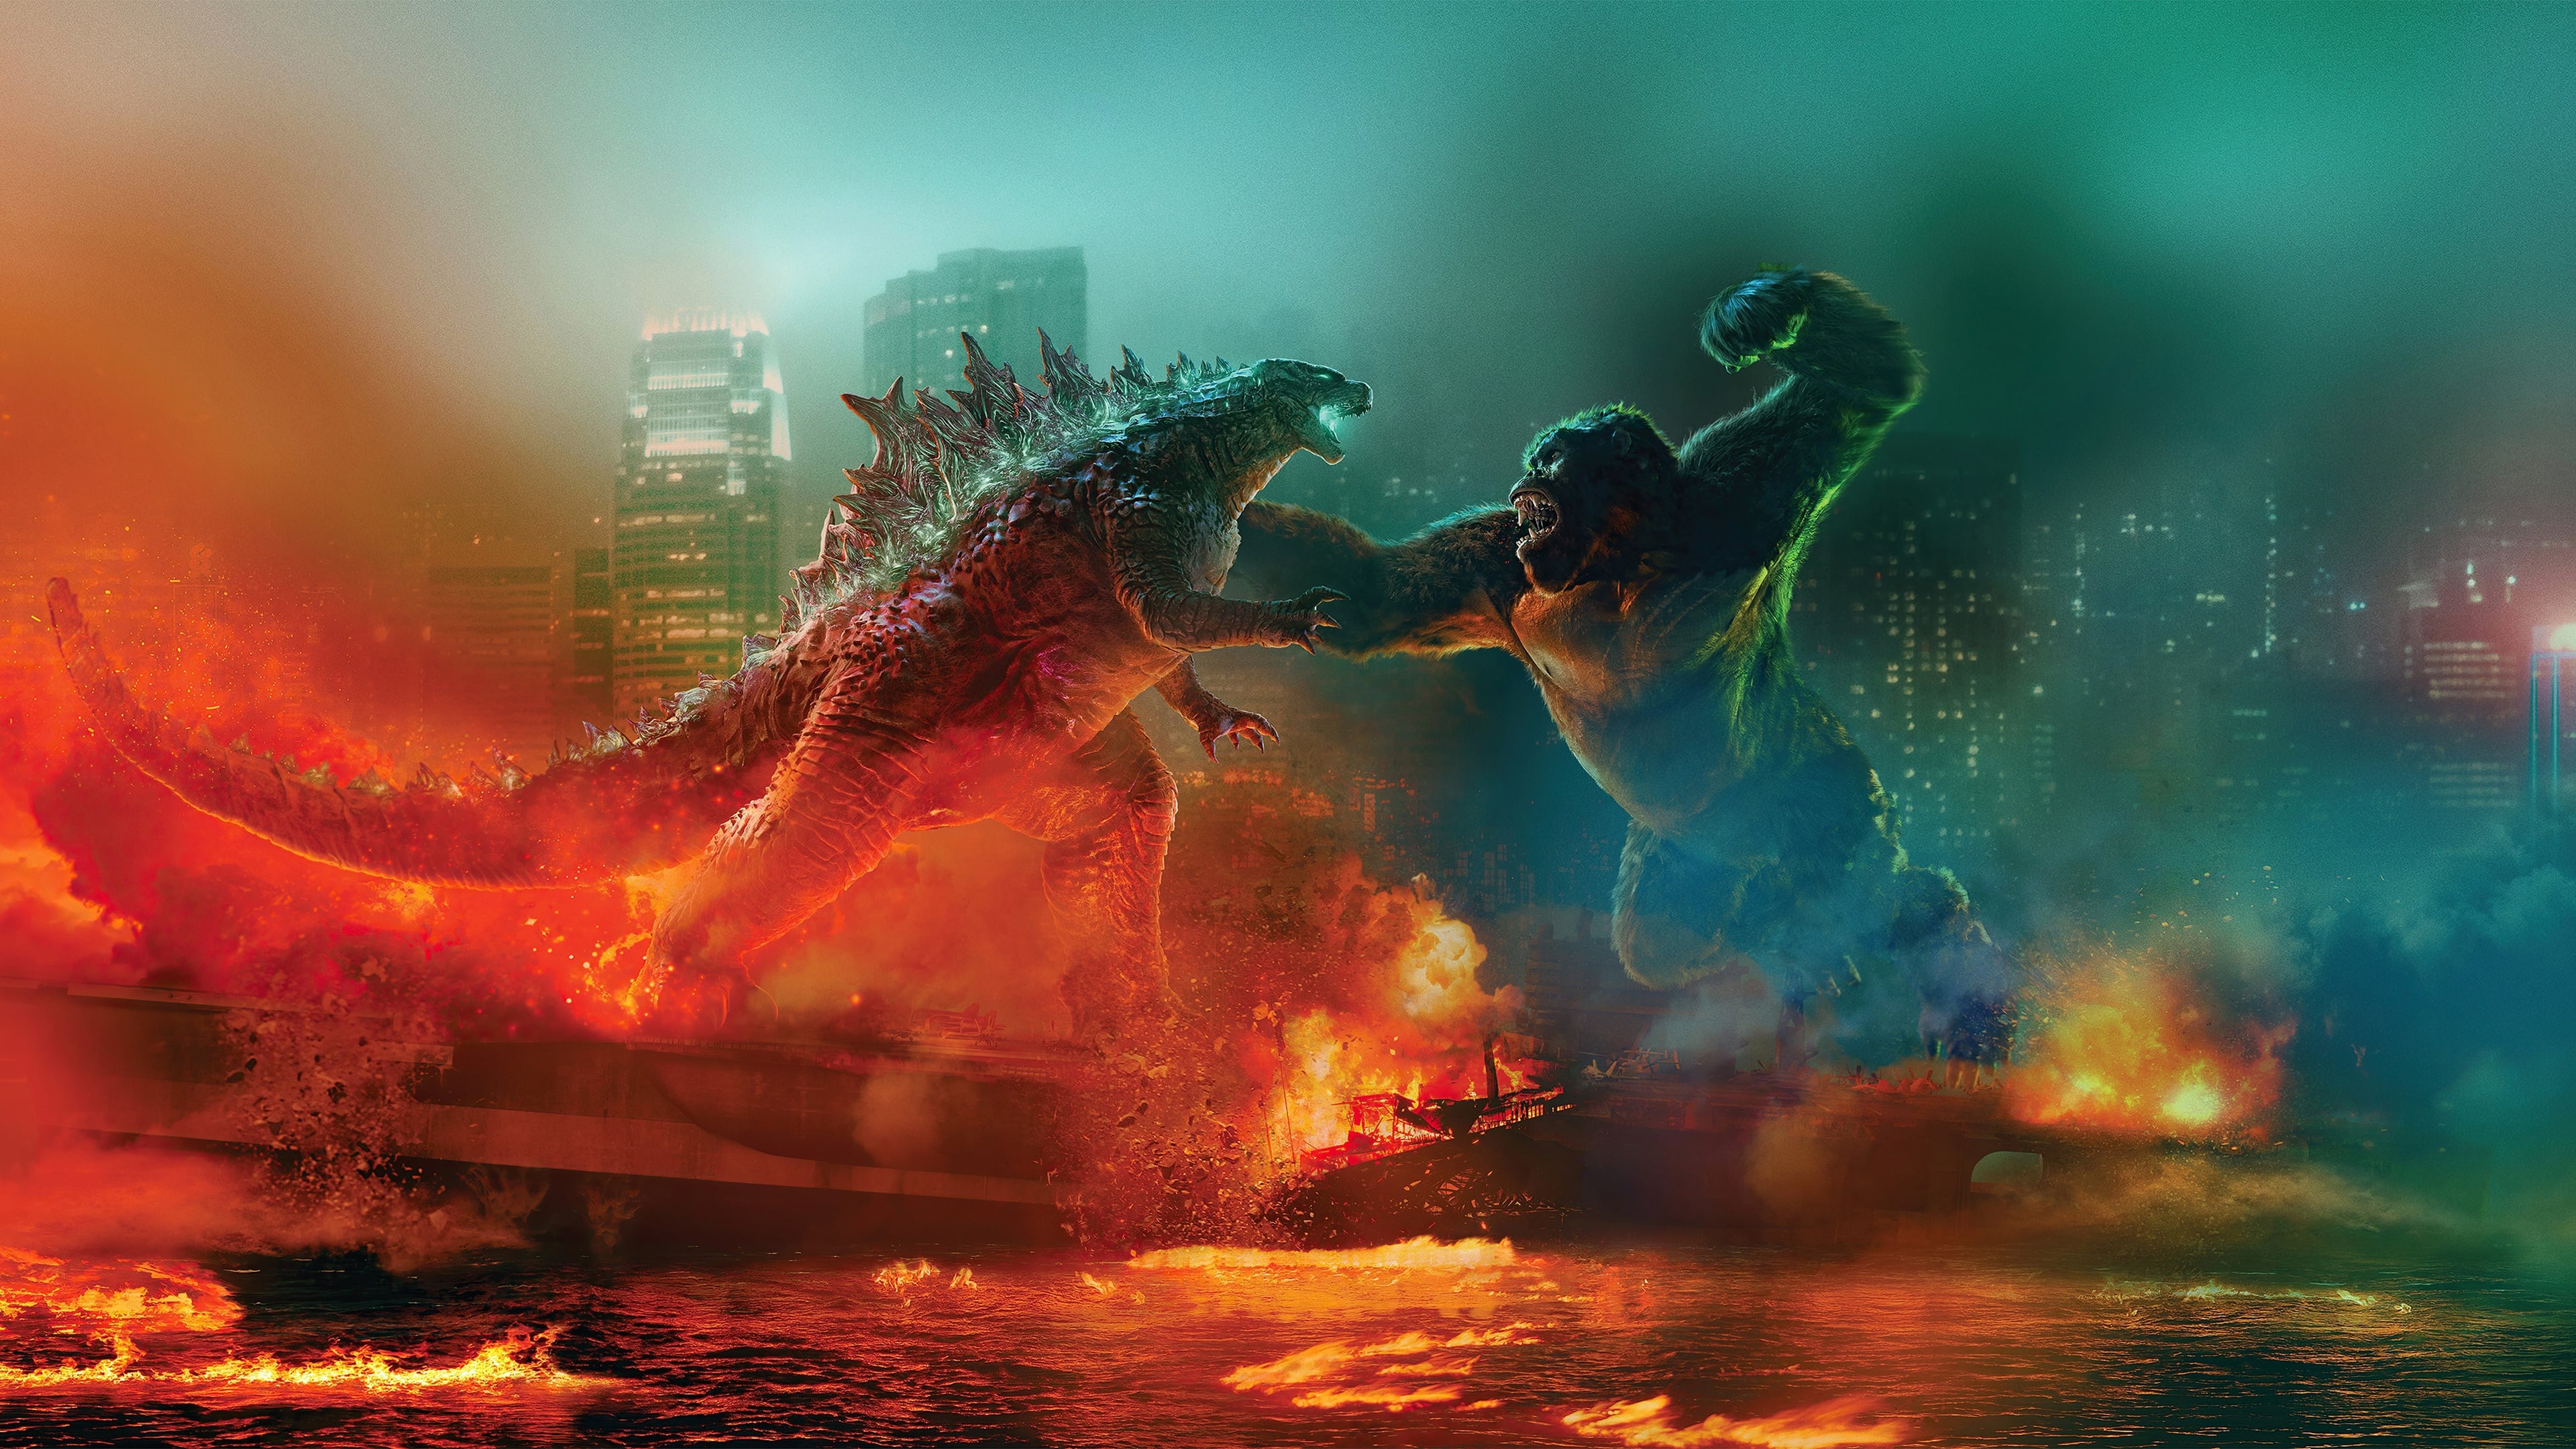 Poster Phim Godzilla Đại Chiến Kong (Godzilla vs. Kong)